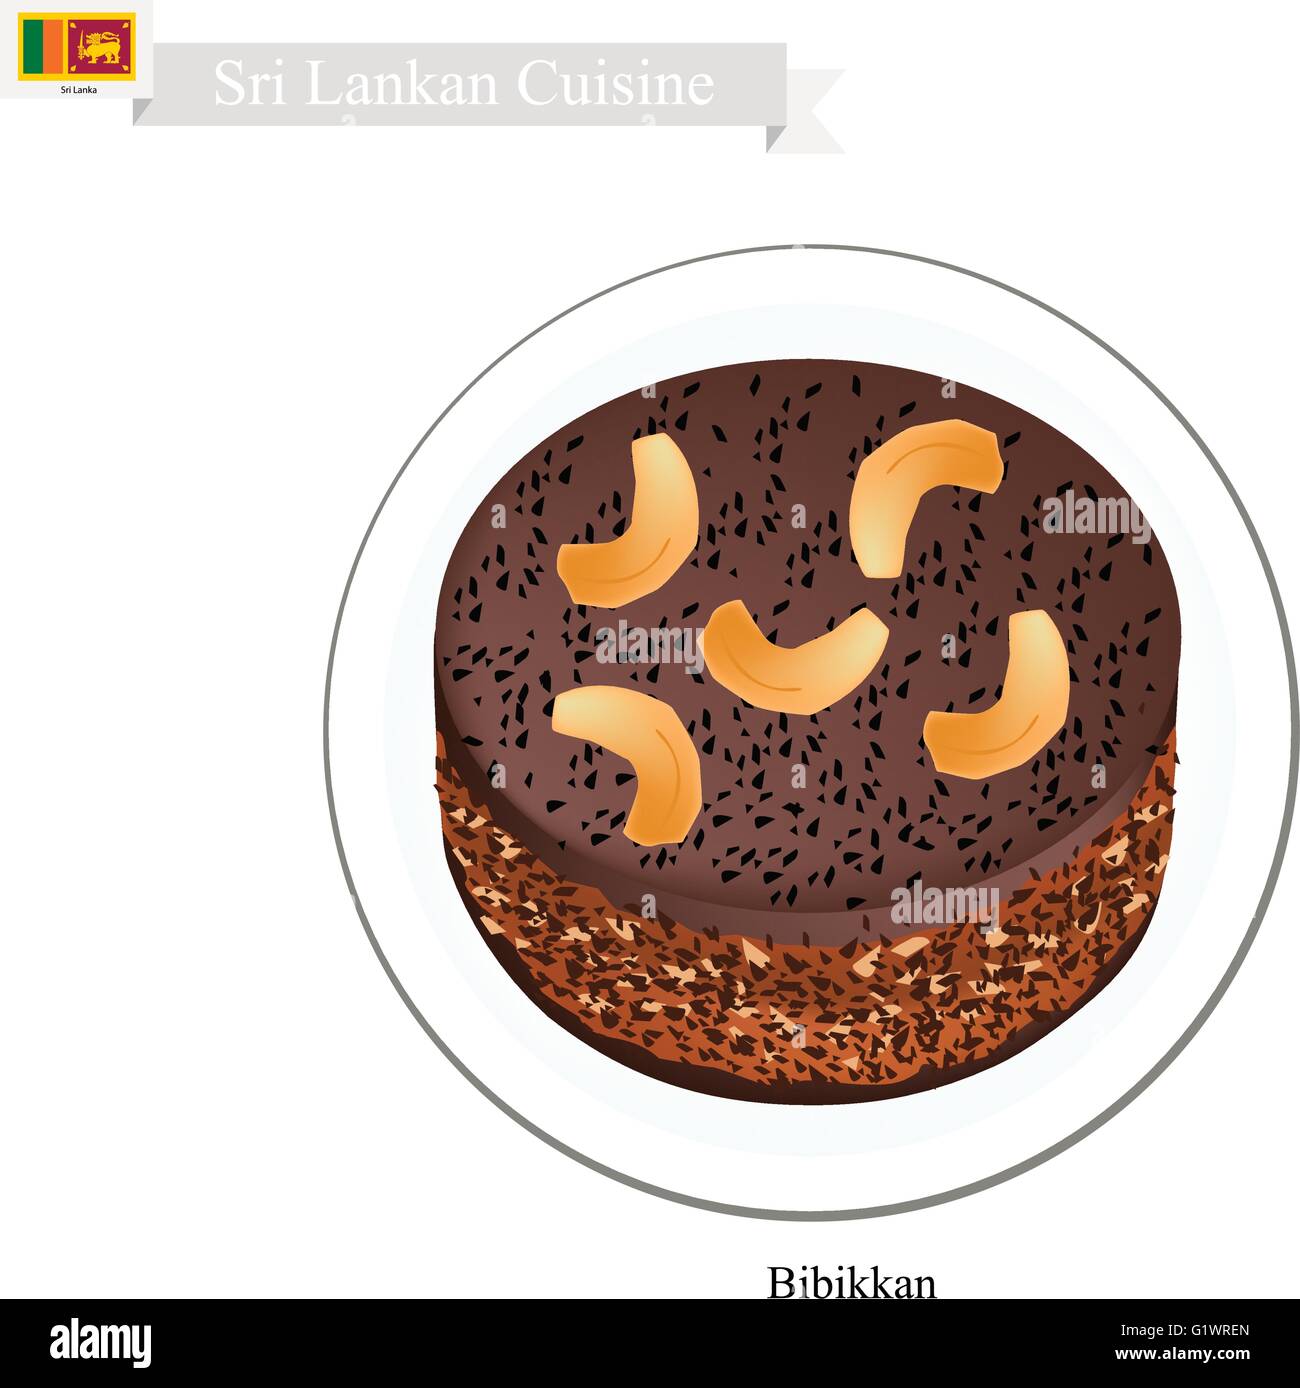 Sri Lankan Cuisine, Bibikkan or Traditional Dark Moist Cake Made of Shredded Coconut, Jaggery, Dry Fruits and Semolina. One of T Stock Vector